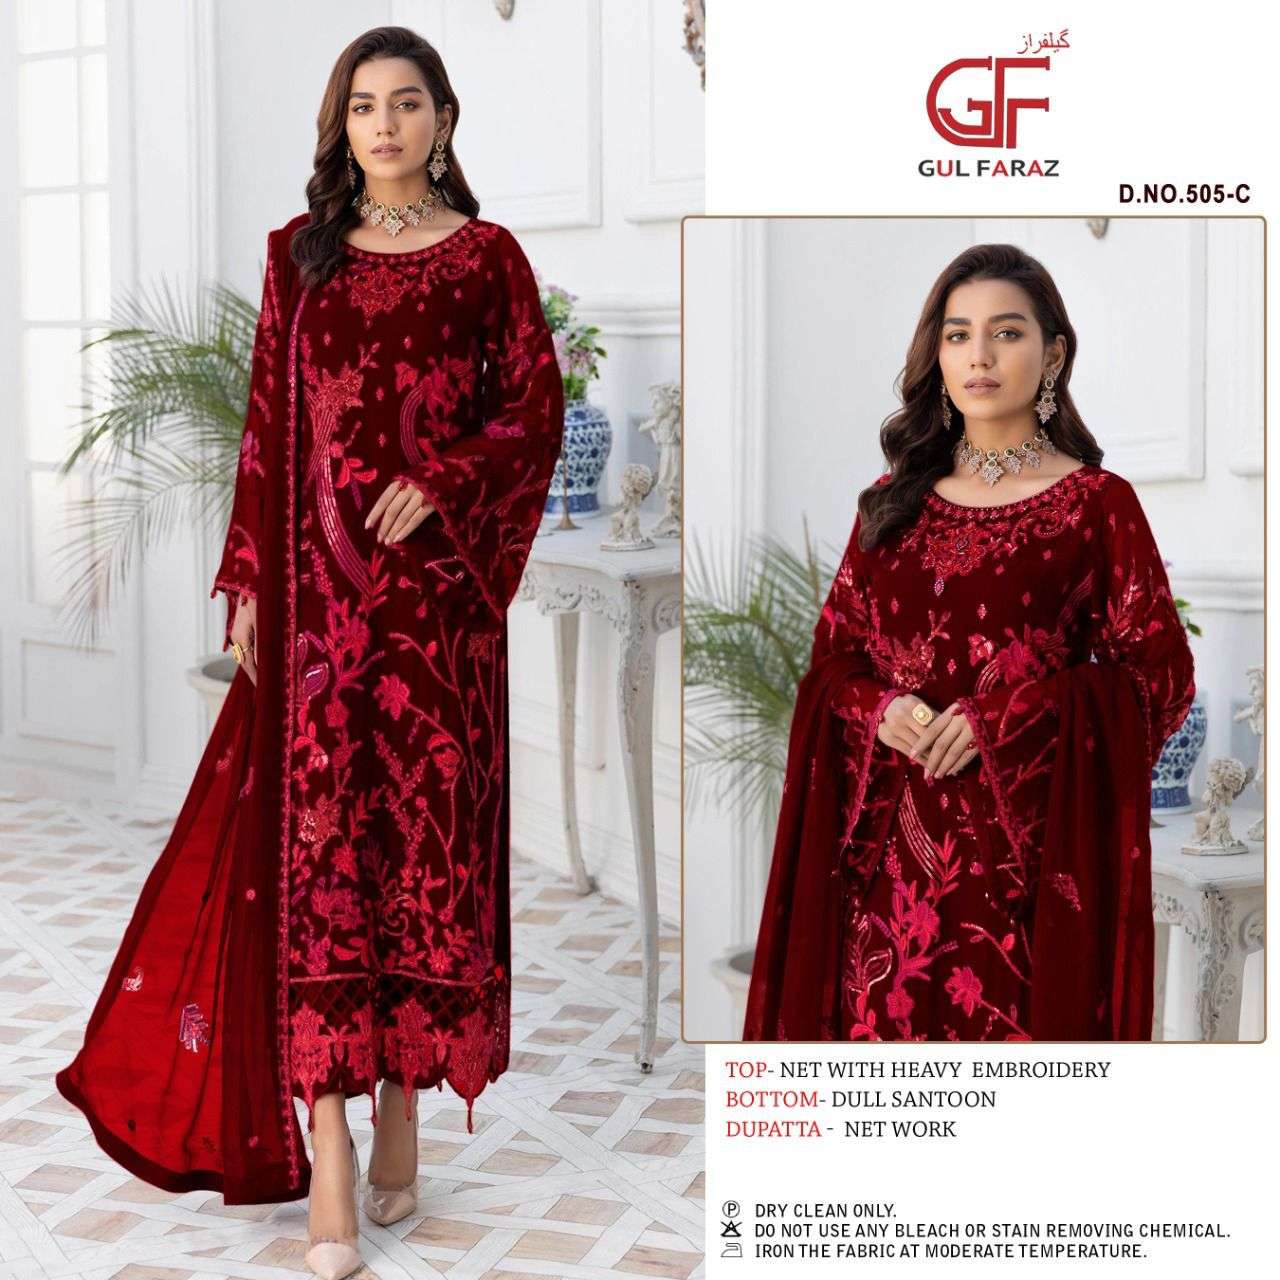 gulfaraz 505 hit pakistani design best price supplier from surat